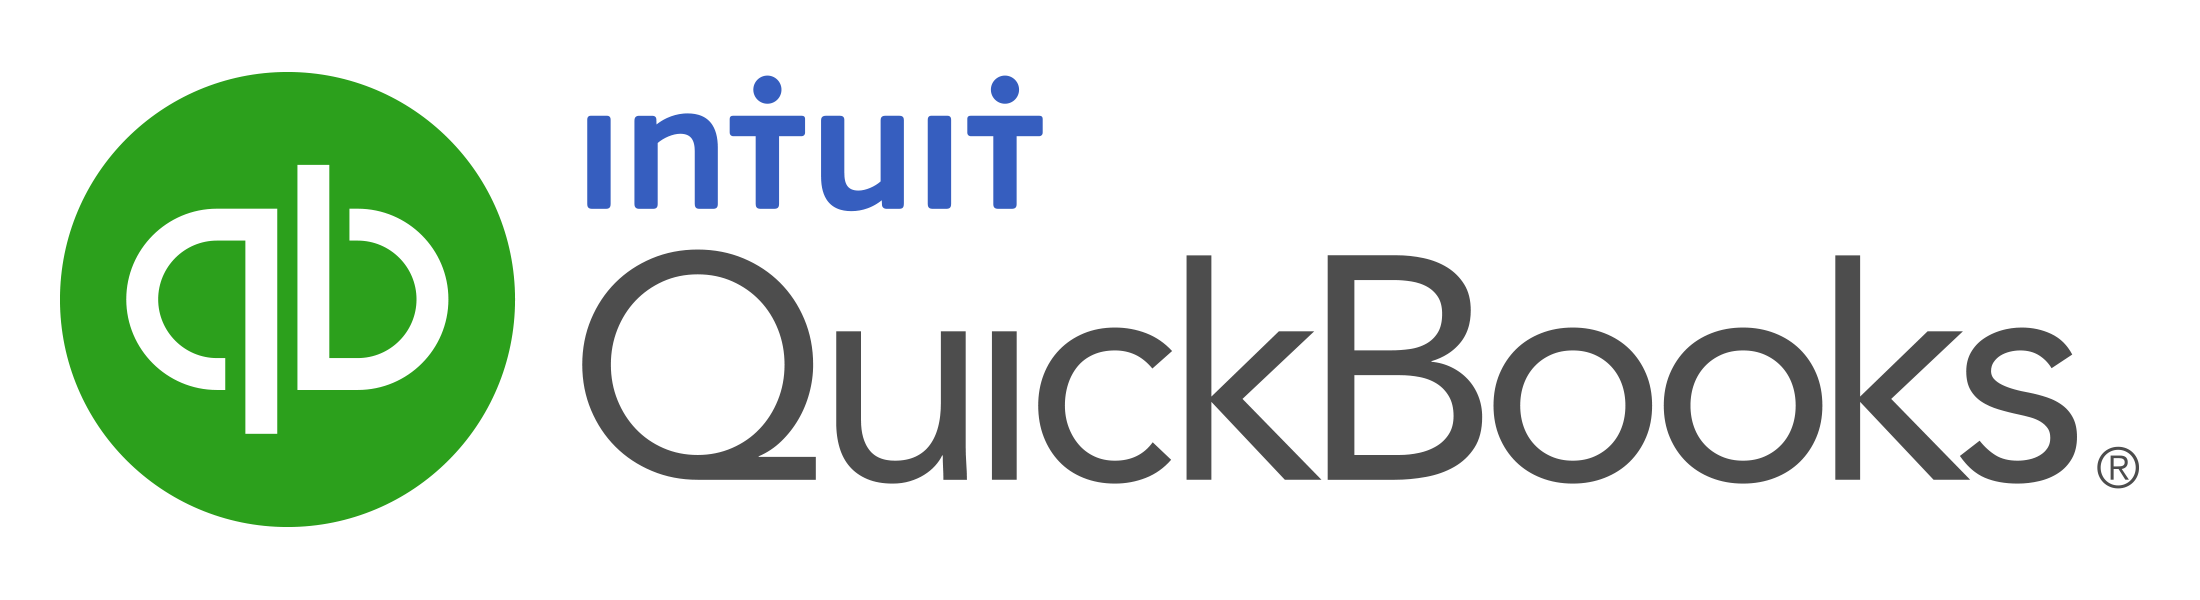 qk_intuit_logo